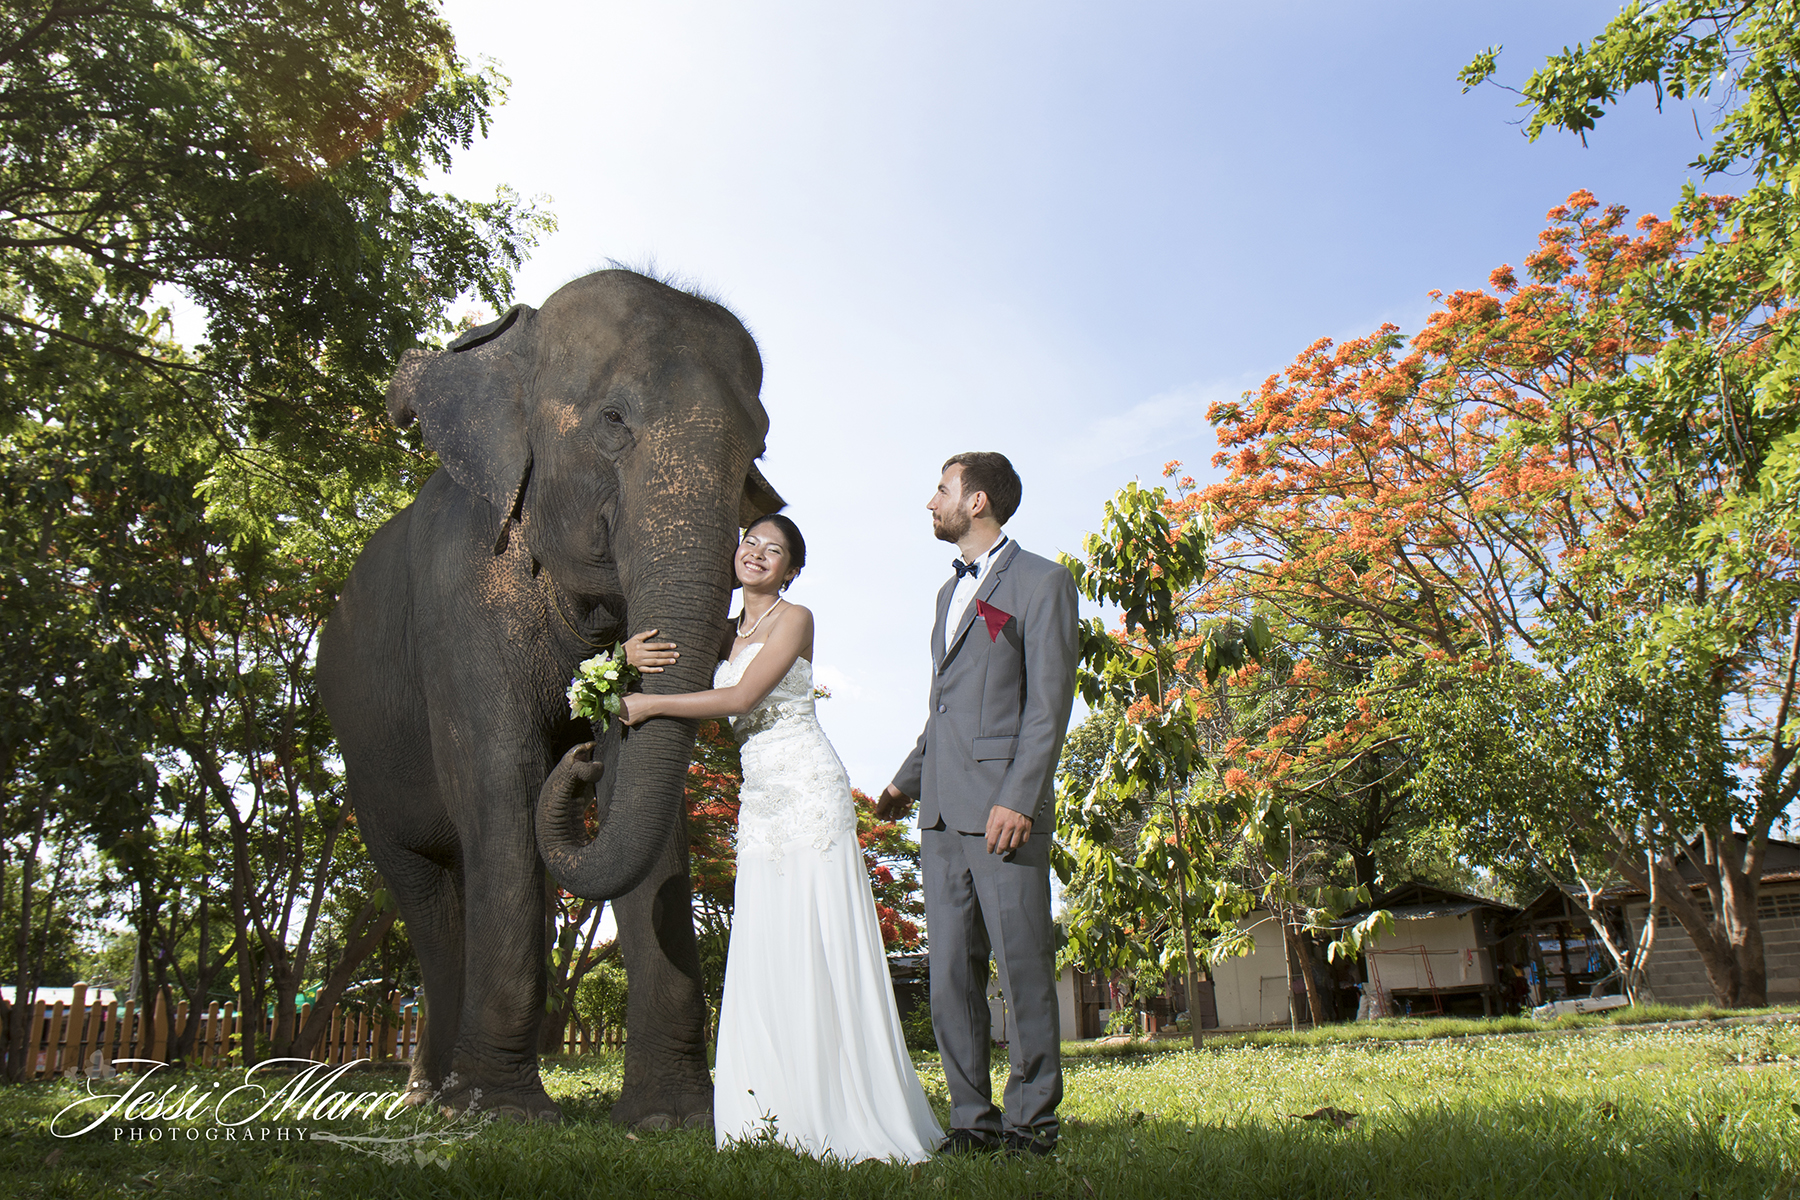 Thailand Destination Wedding Photography